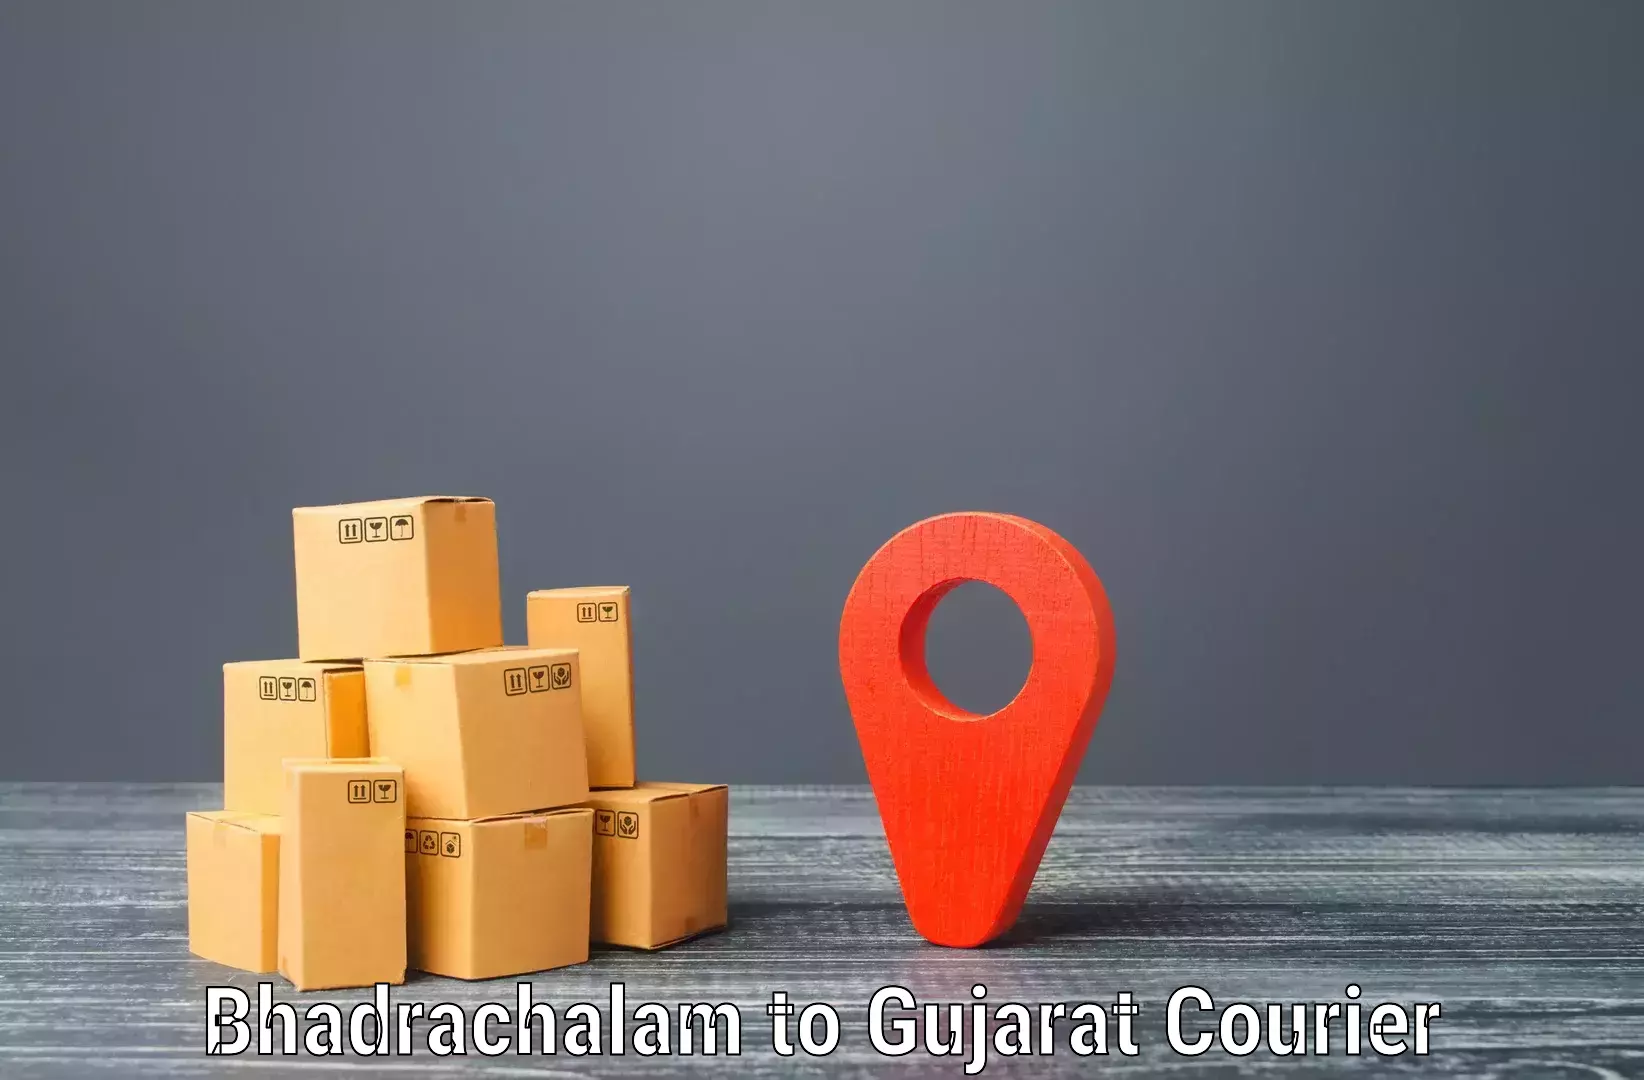 Courier service innovation Bhadrachalam to Valsad